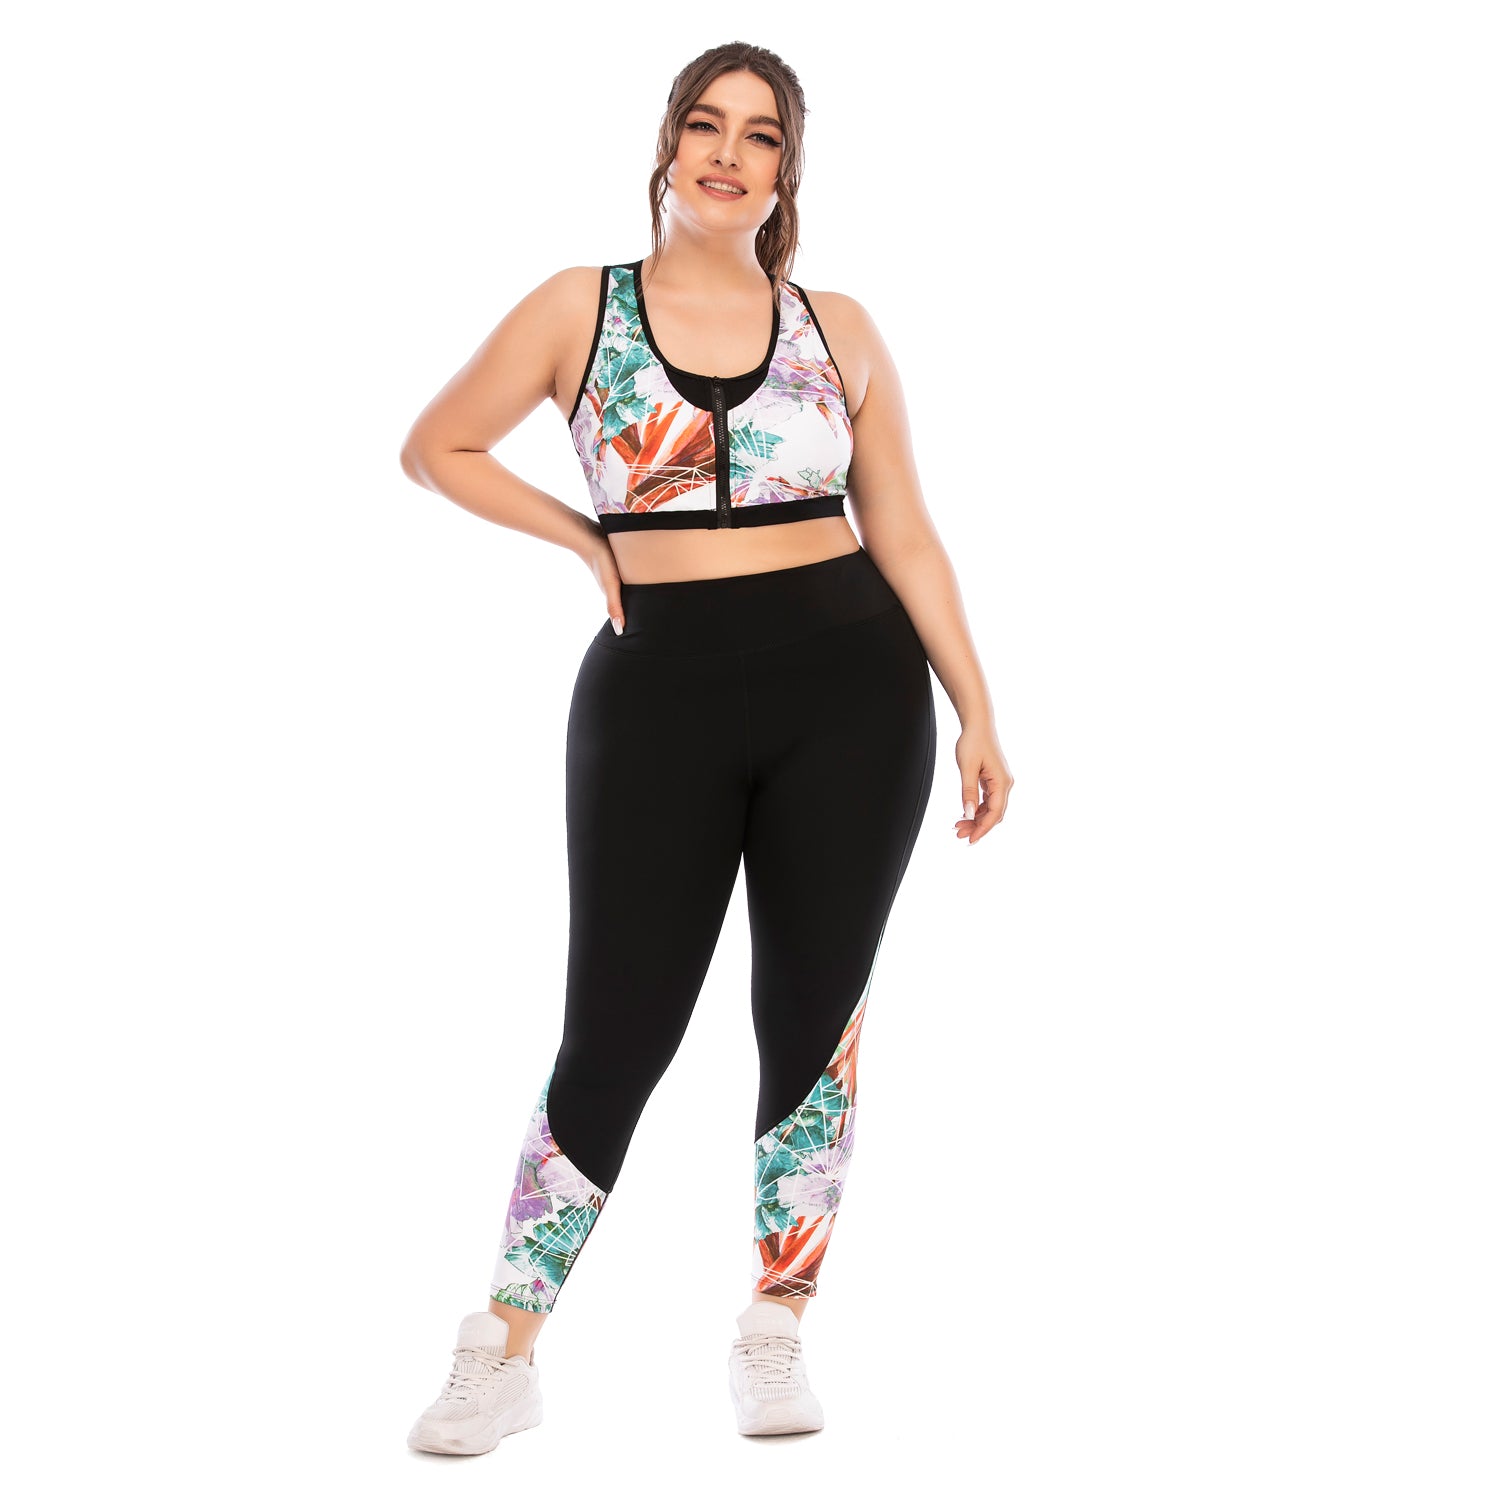 Plus Size Workout Clothes Racing Back Bra Yoga Pants